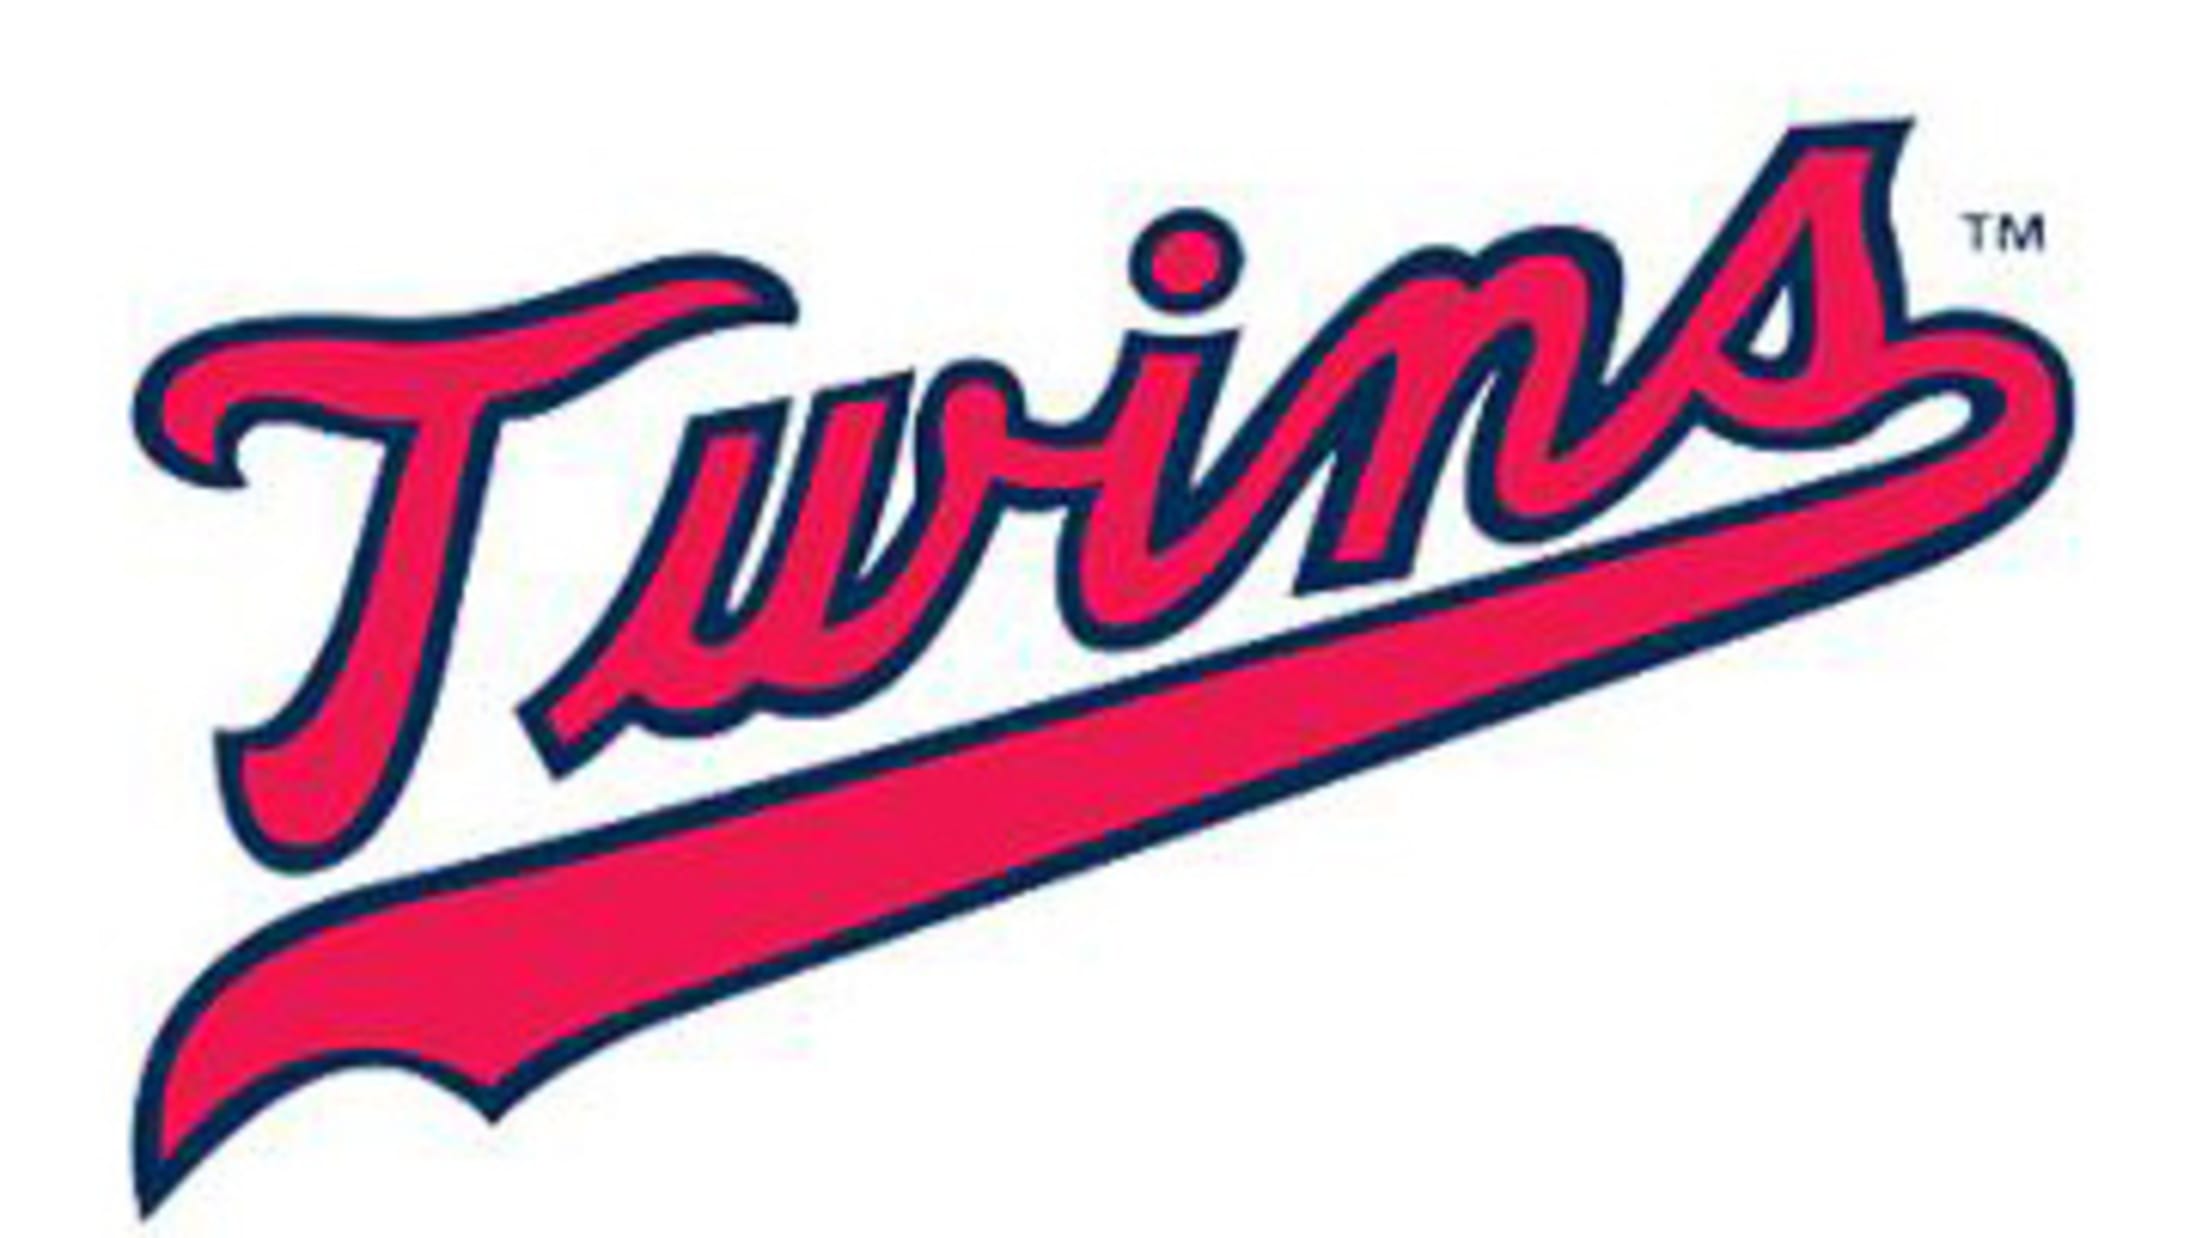 Minnesota Twins' team name history